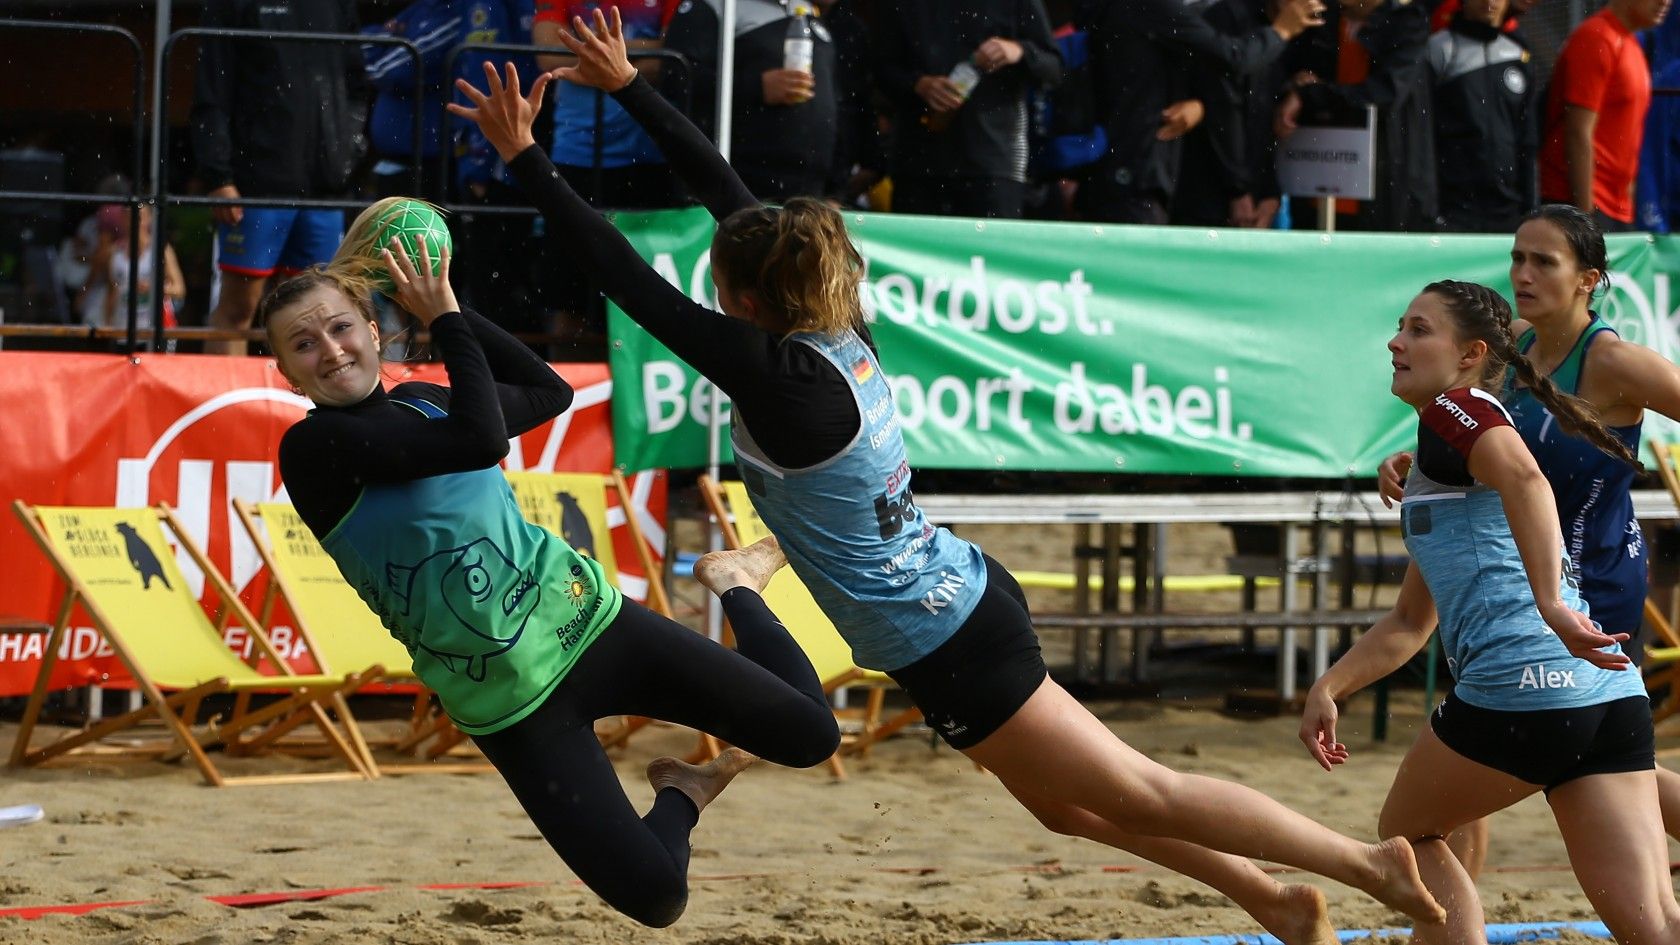 Deutsche Meisterschaften im Beachhandball gestartet DHB.de